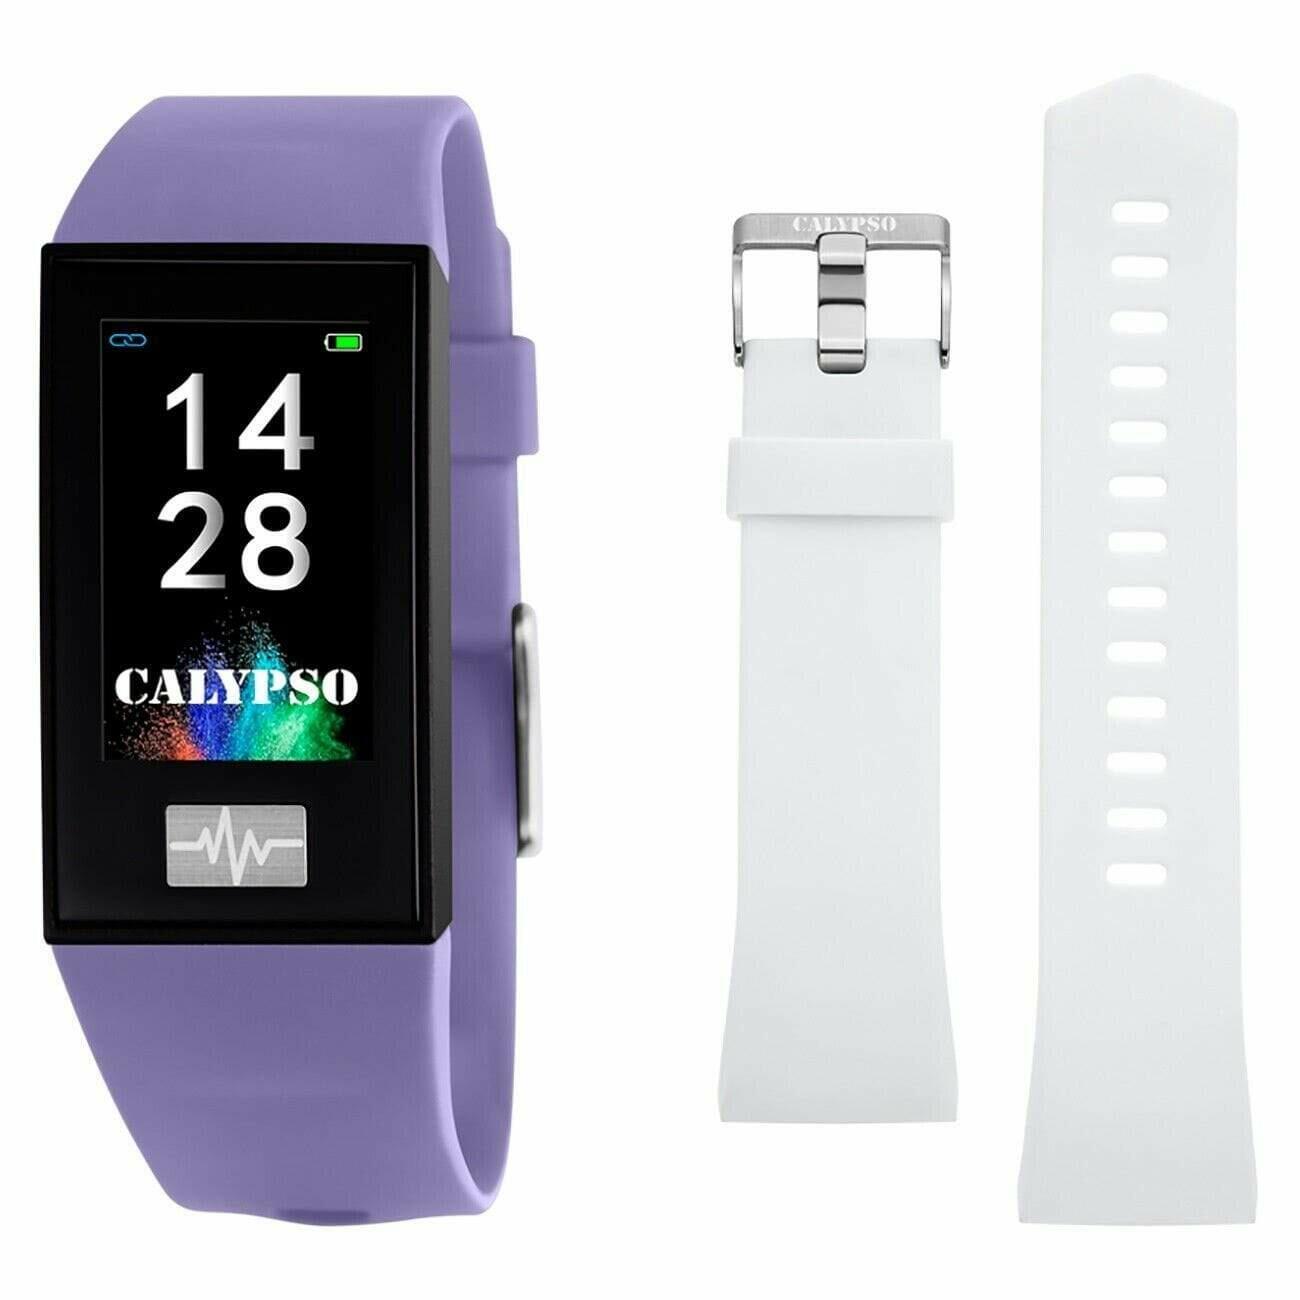 Calypso Smartime Smart Watch Bluetooth Multifunction Fitness Tracker Lilac Purple - The Classic Watch Buyers Club Ltd